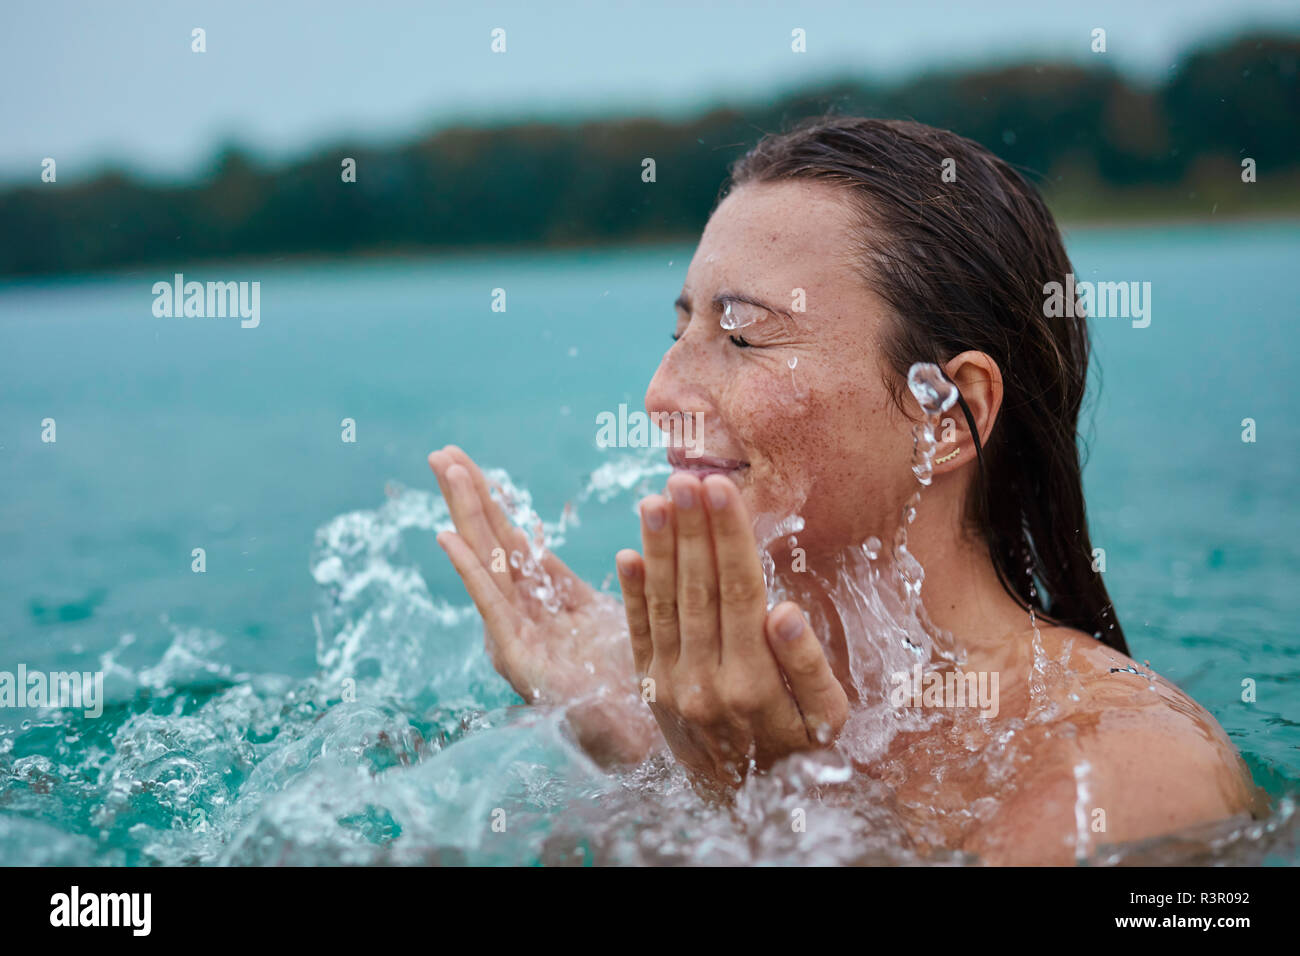 Young woman bathing in lake splashing with water Stock Photo